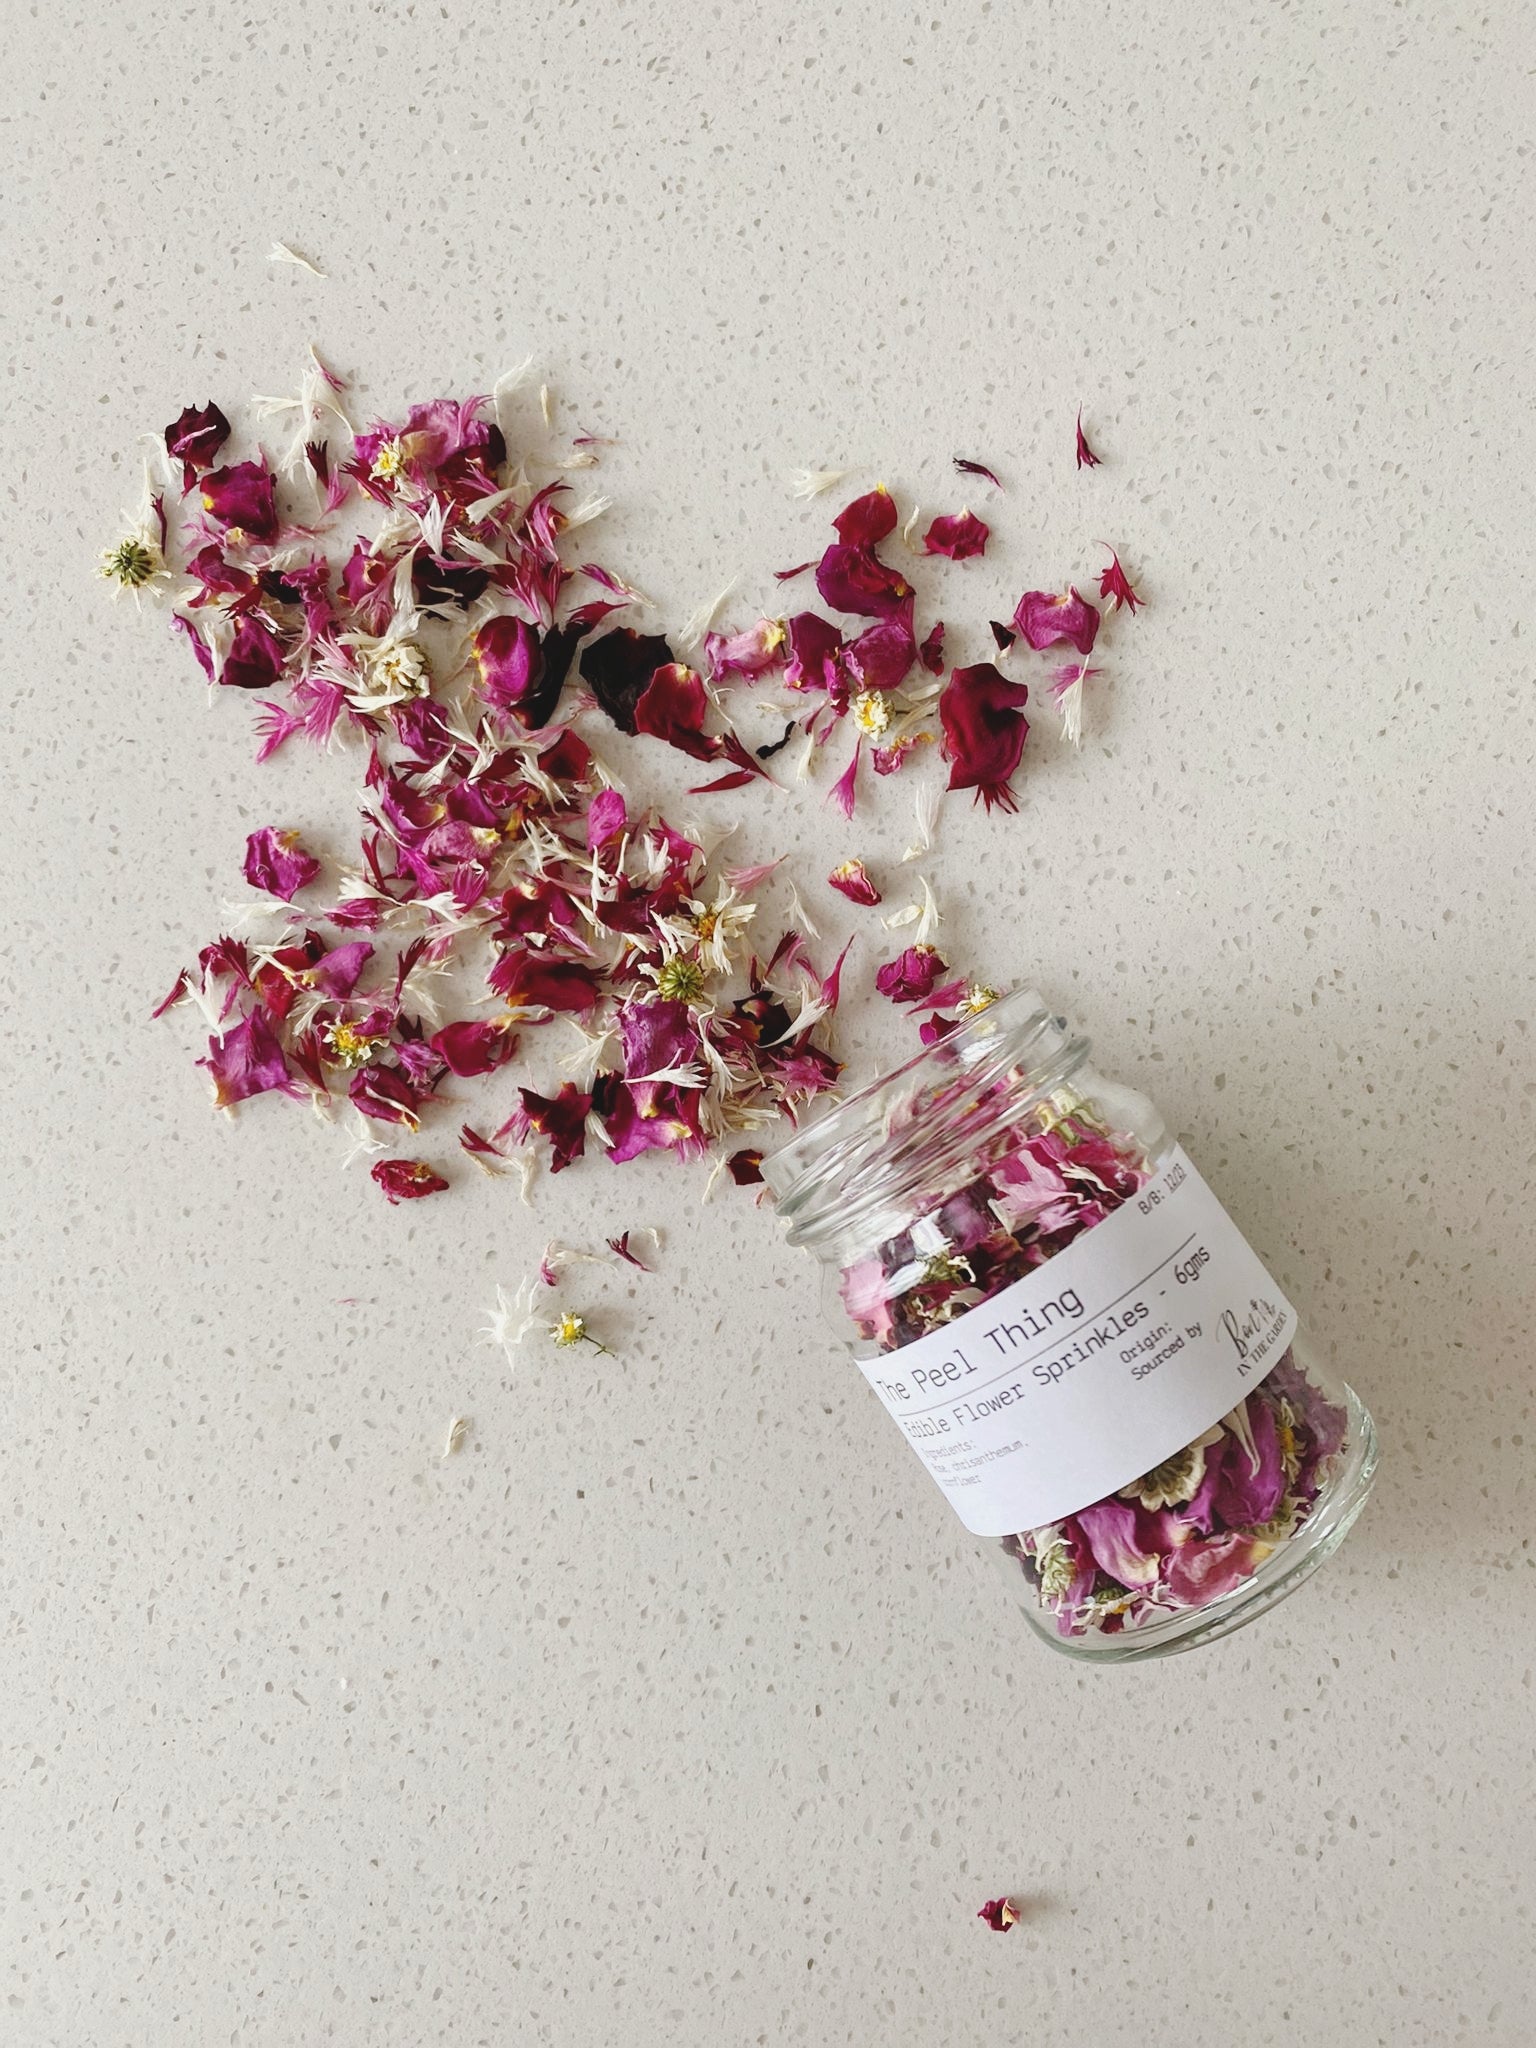 Edible Flower Sprinkles - Rose Petals Mix